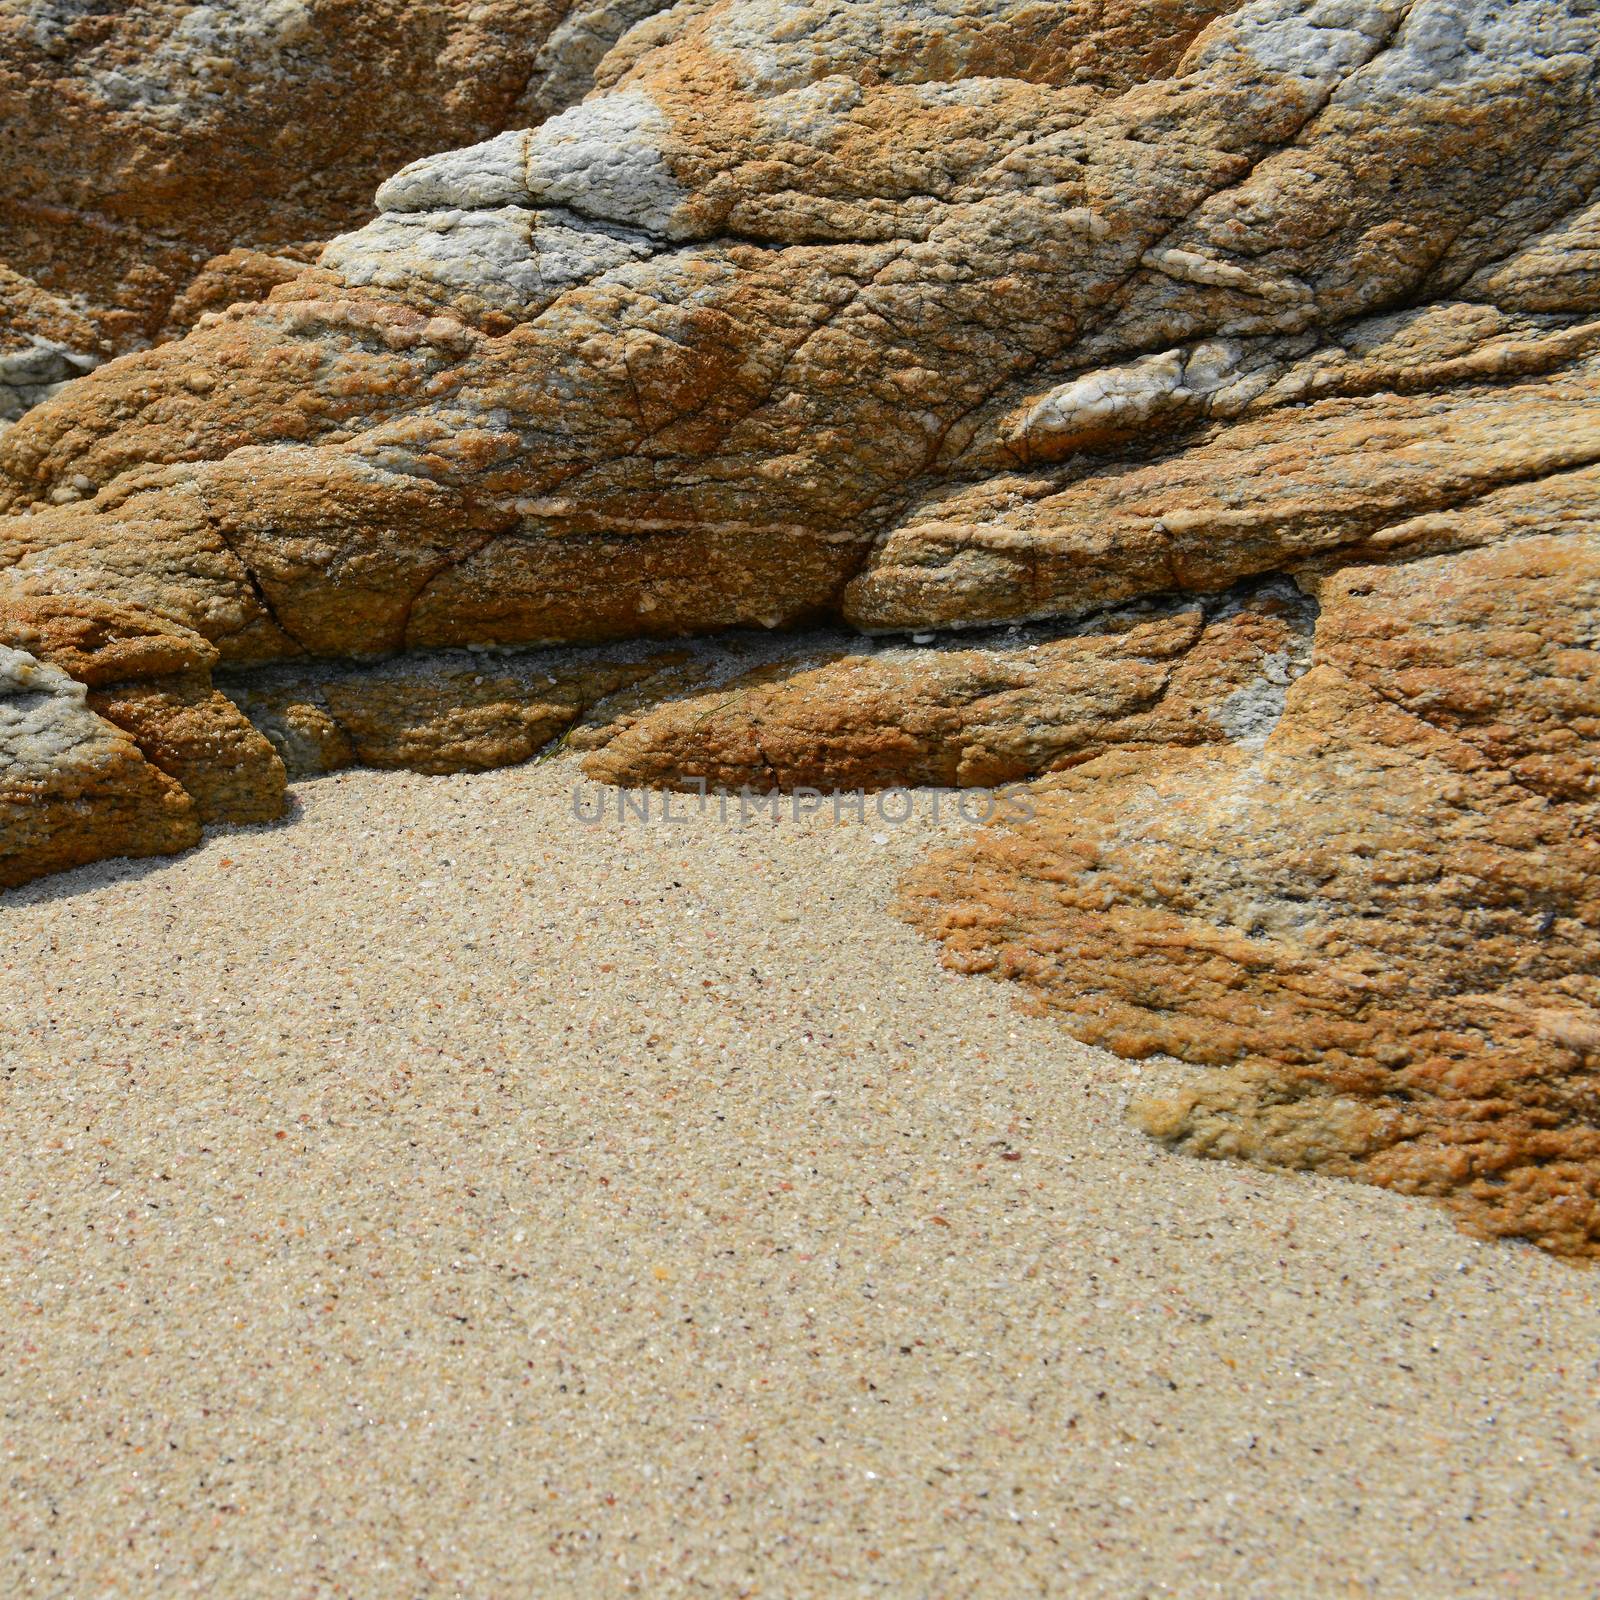 Sand beach rocks beautiful pattern and texture 